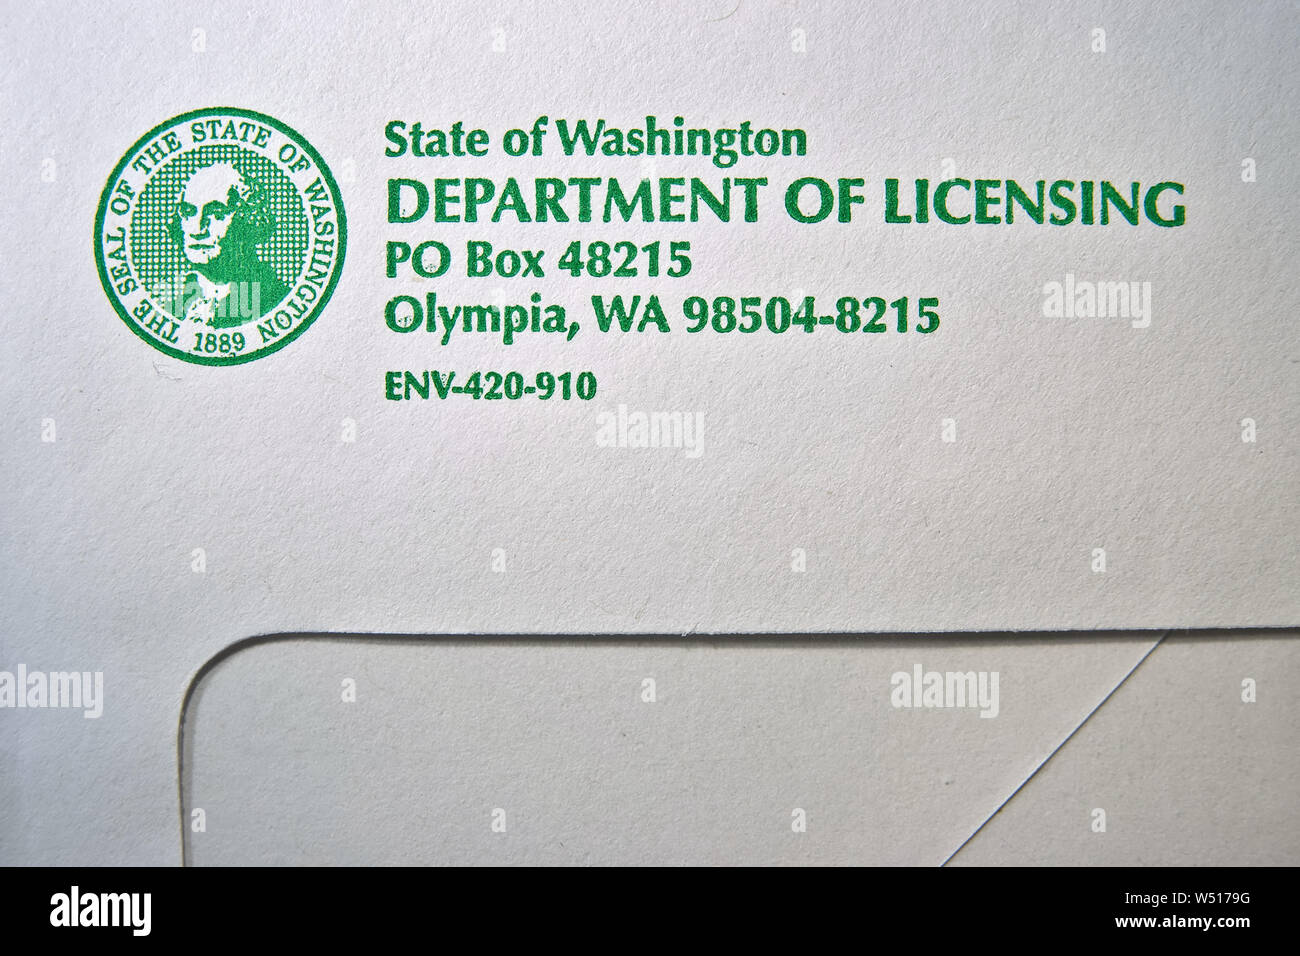 State of Washington Department of licensing envelope close-up, 2019 Stock Photo